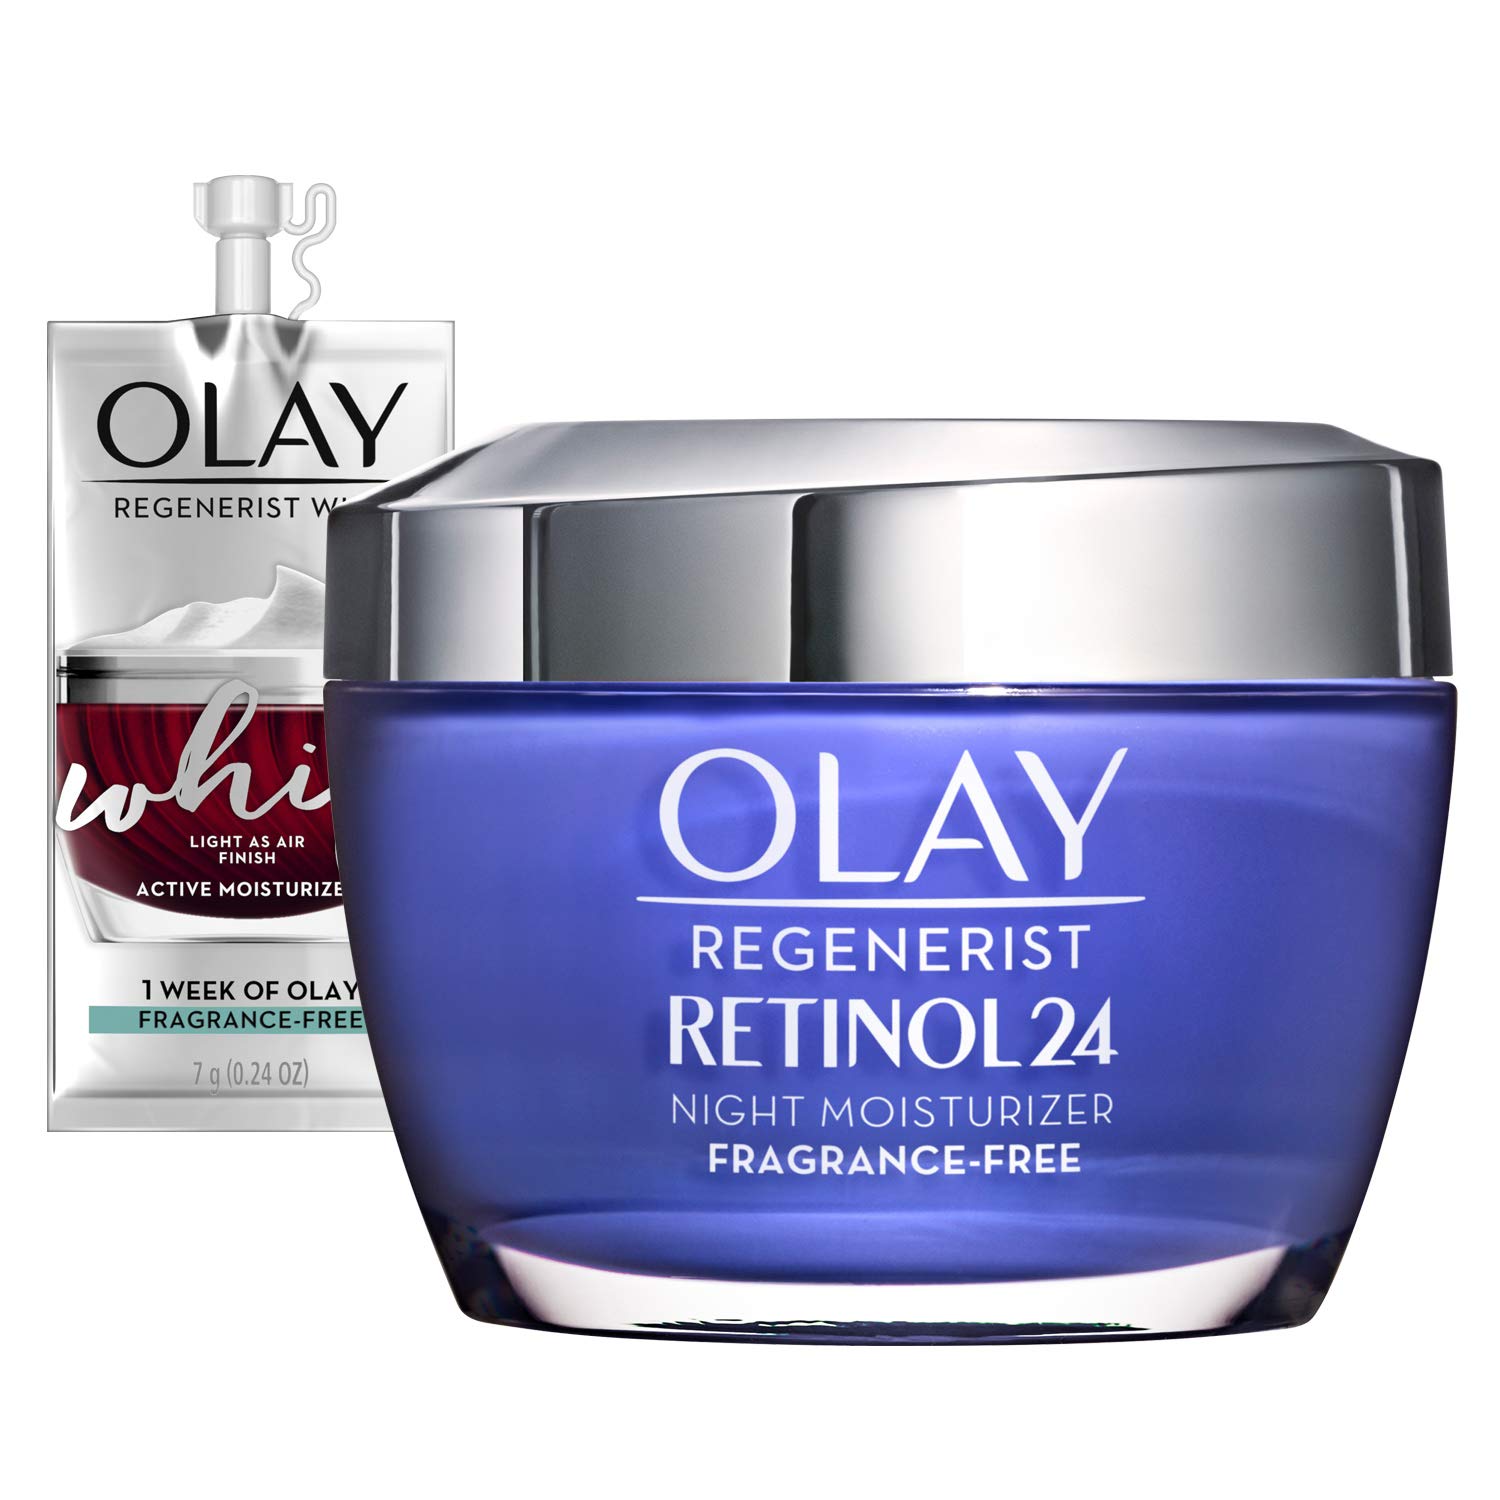 Olay Regenerist Retinol Moisturizer, Retinol 24 Night Face Cream with Niacinamide, Anti-Wrinkle Frag